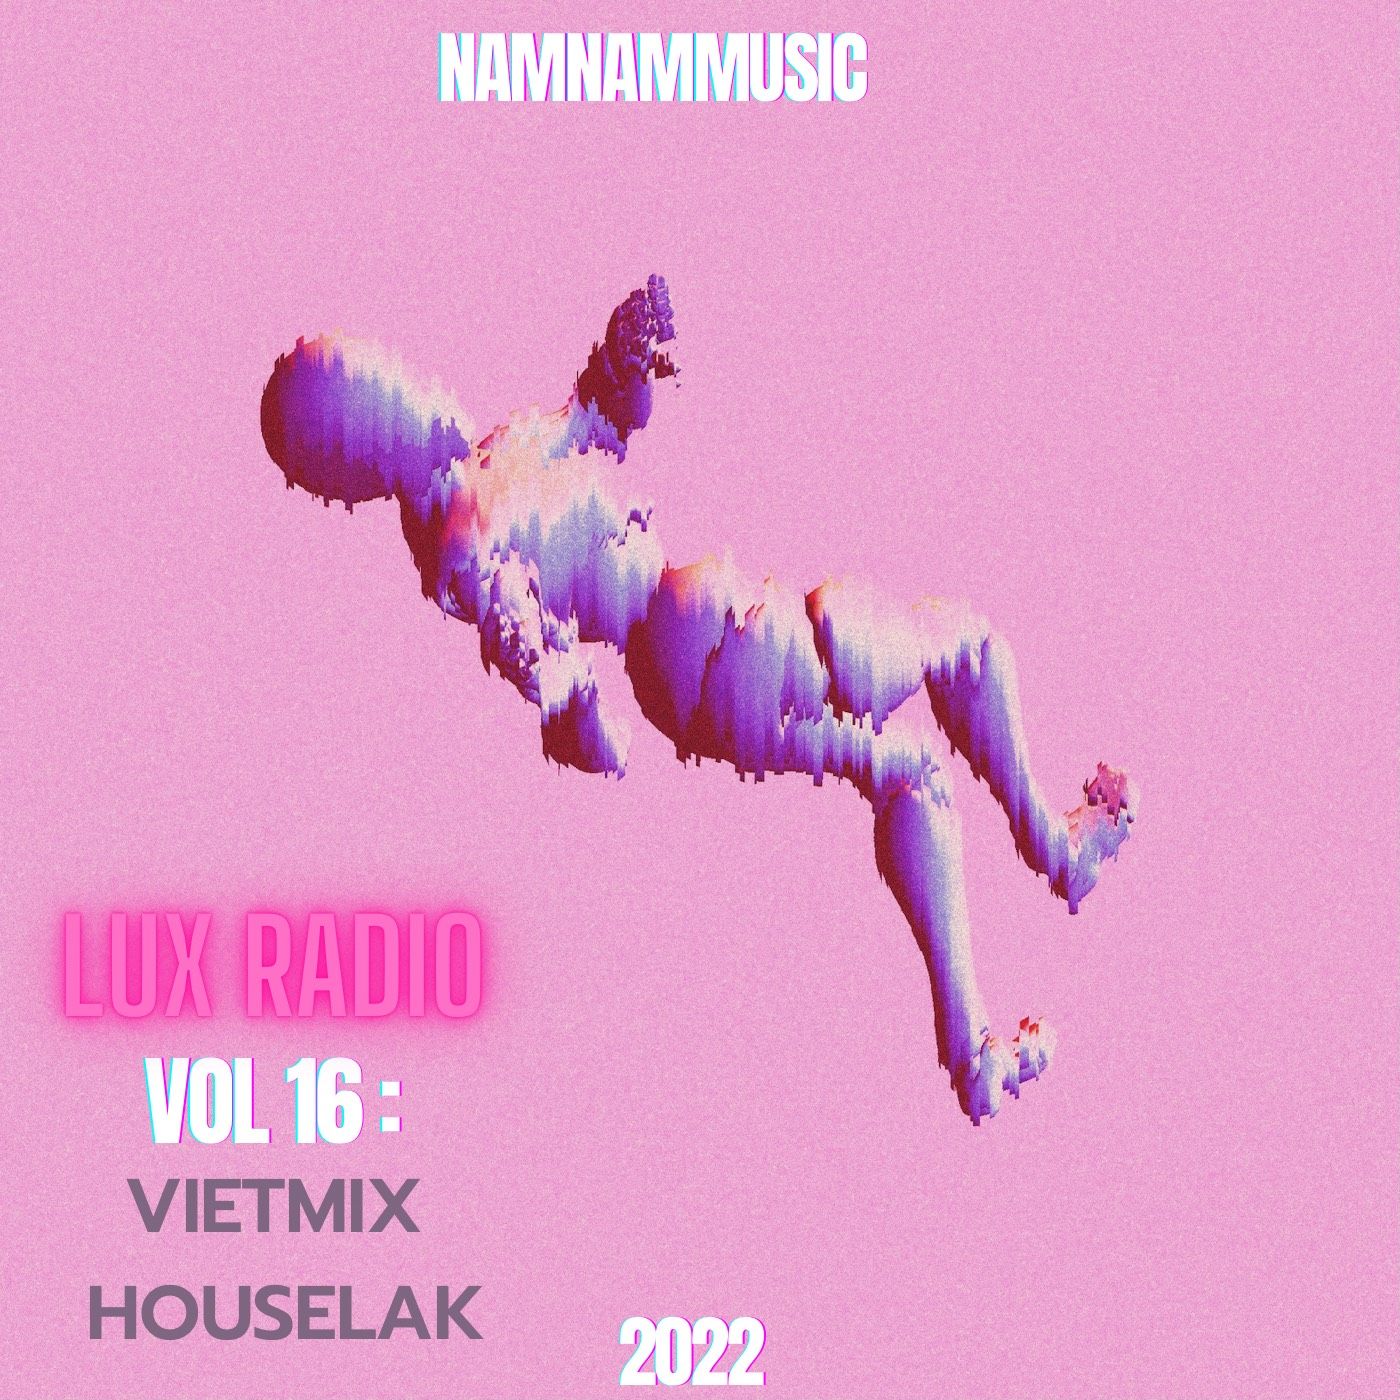 Tải xuống | NAMNAMMUSIC |  LUX RADIO #16 : VIETMIX HOUSELAK 2022 |